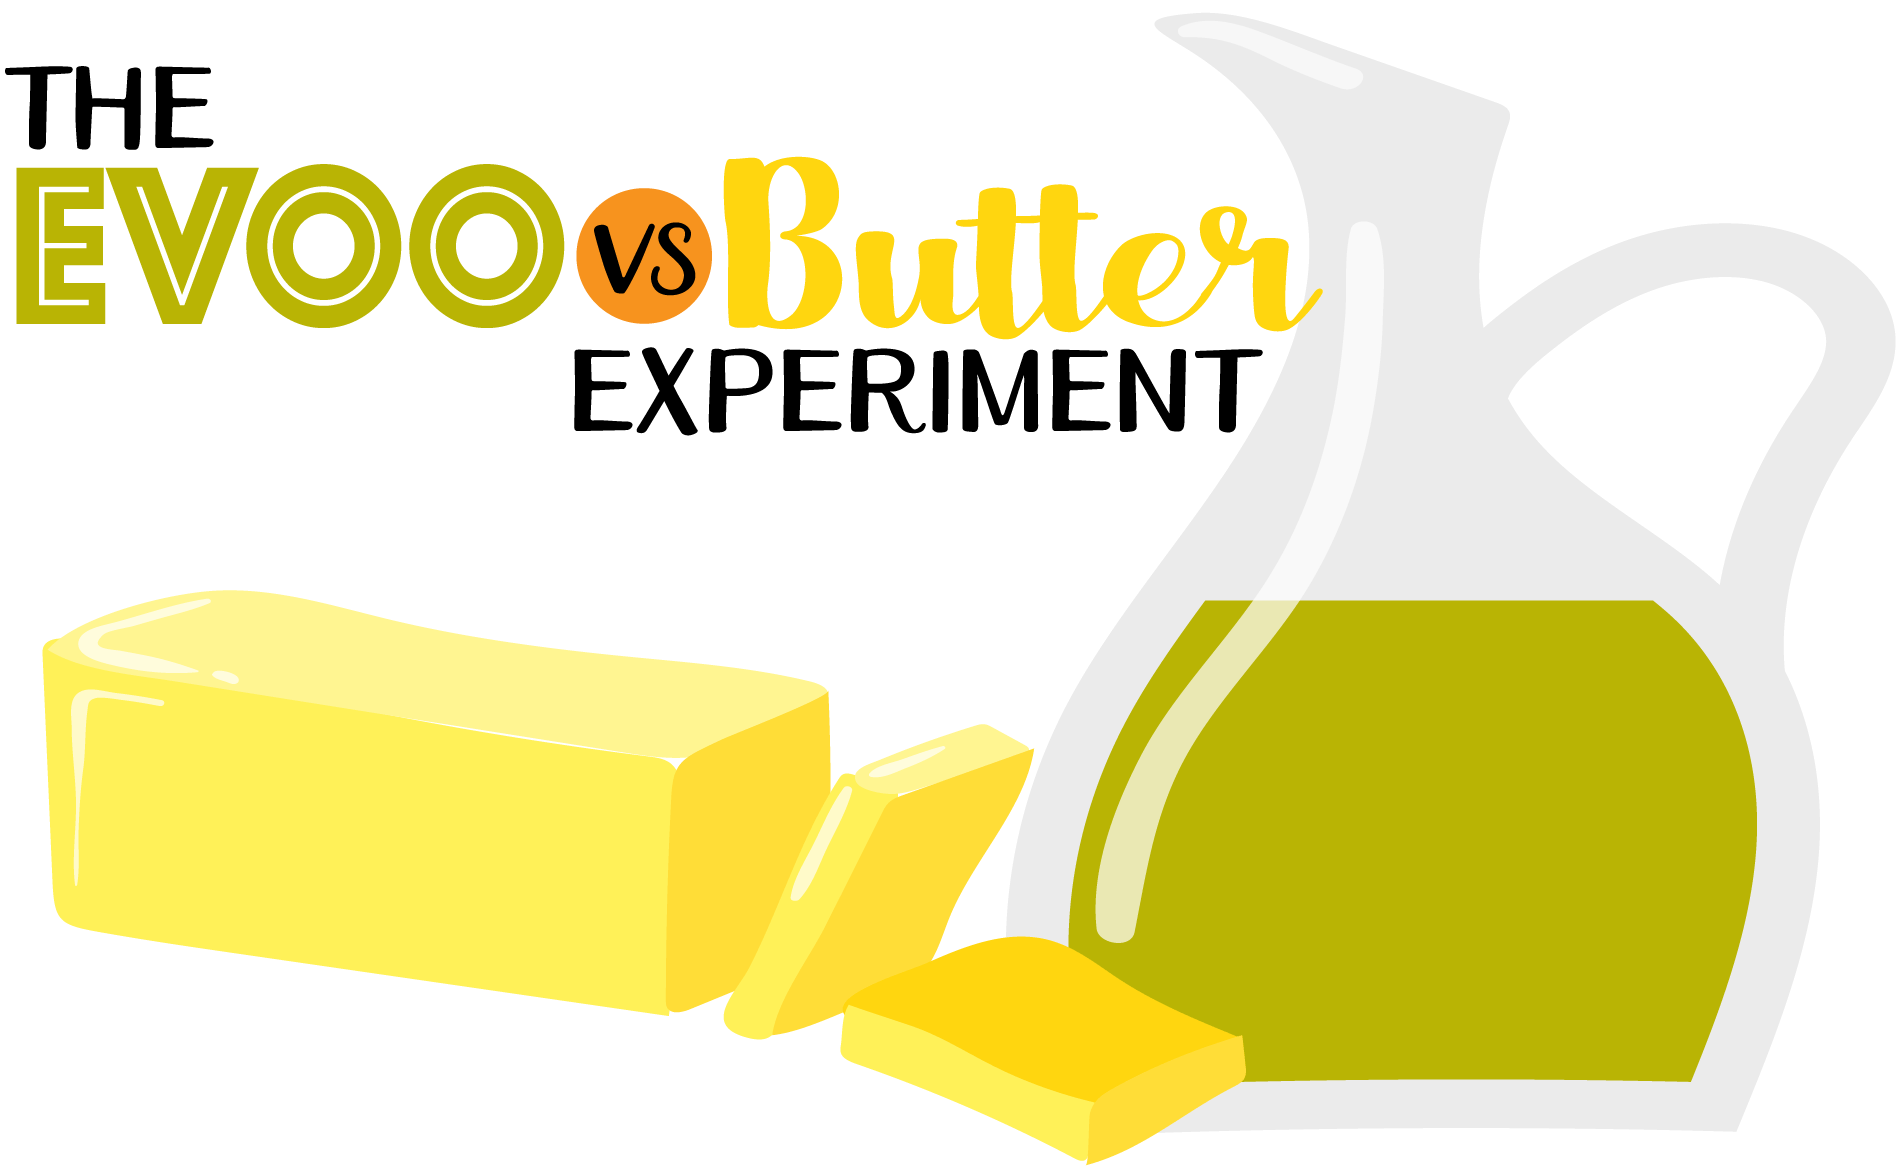 evoo vs butter experiment